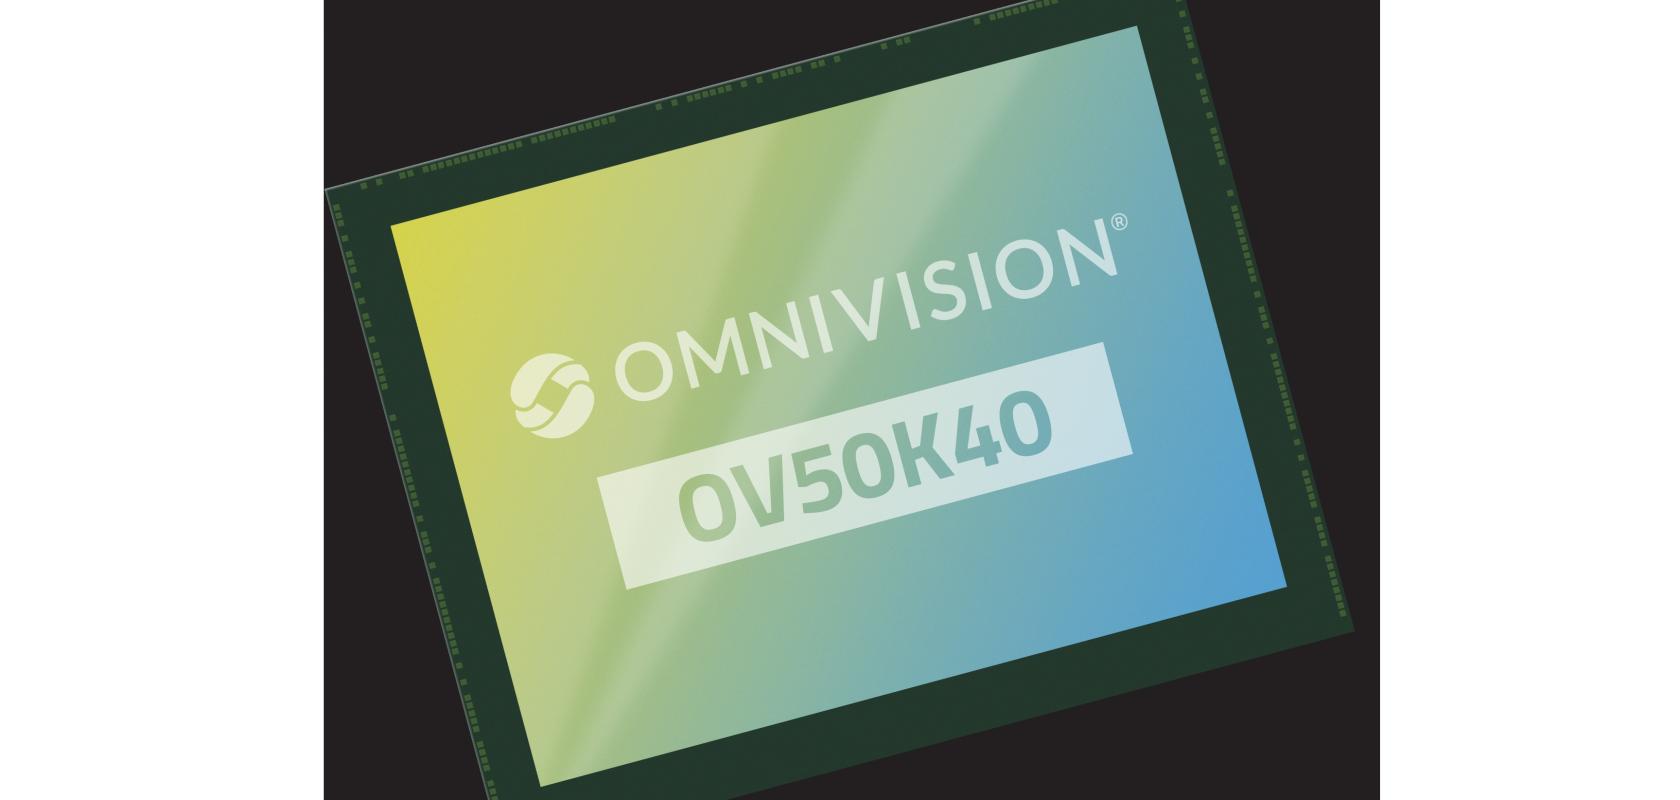 Omnivision image sensor smartphone